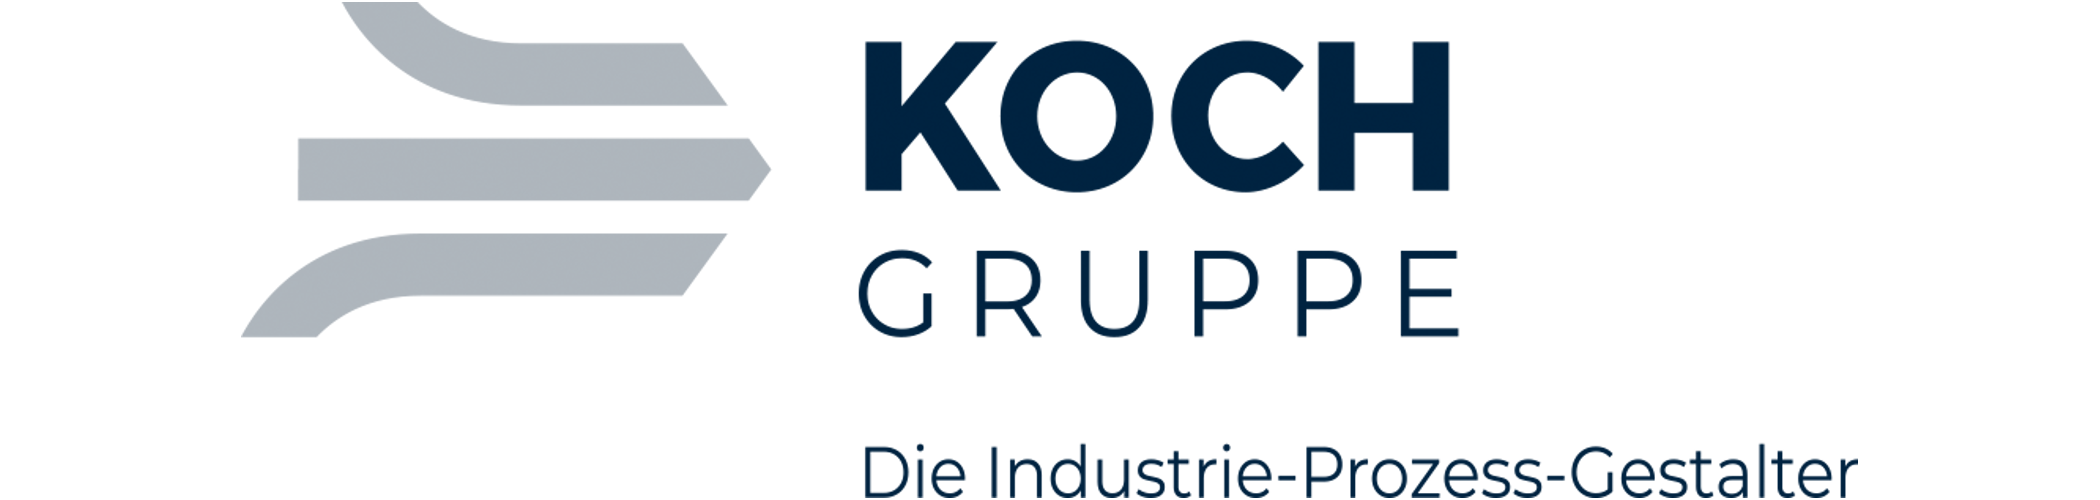 http://www.koch-unternehmensgruppe.de/